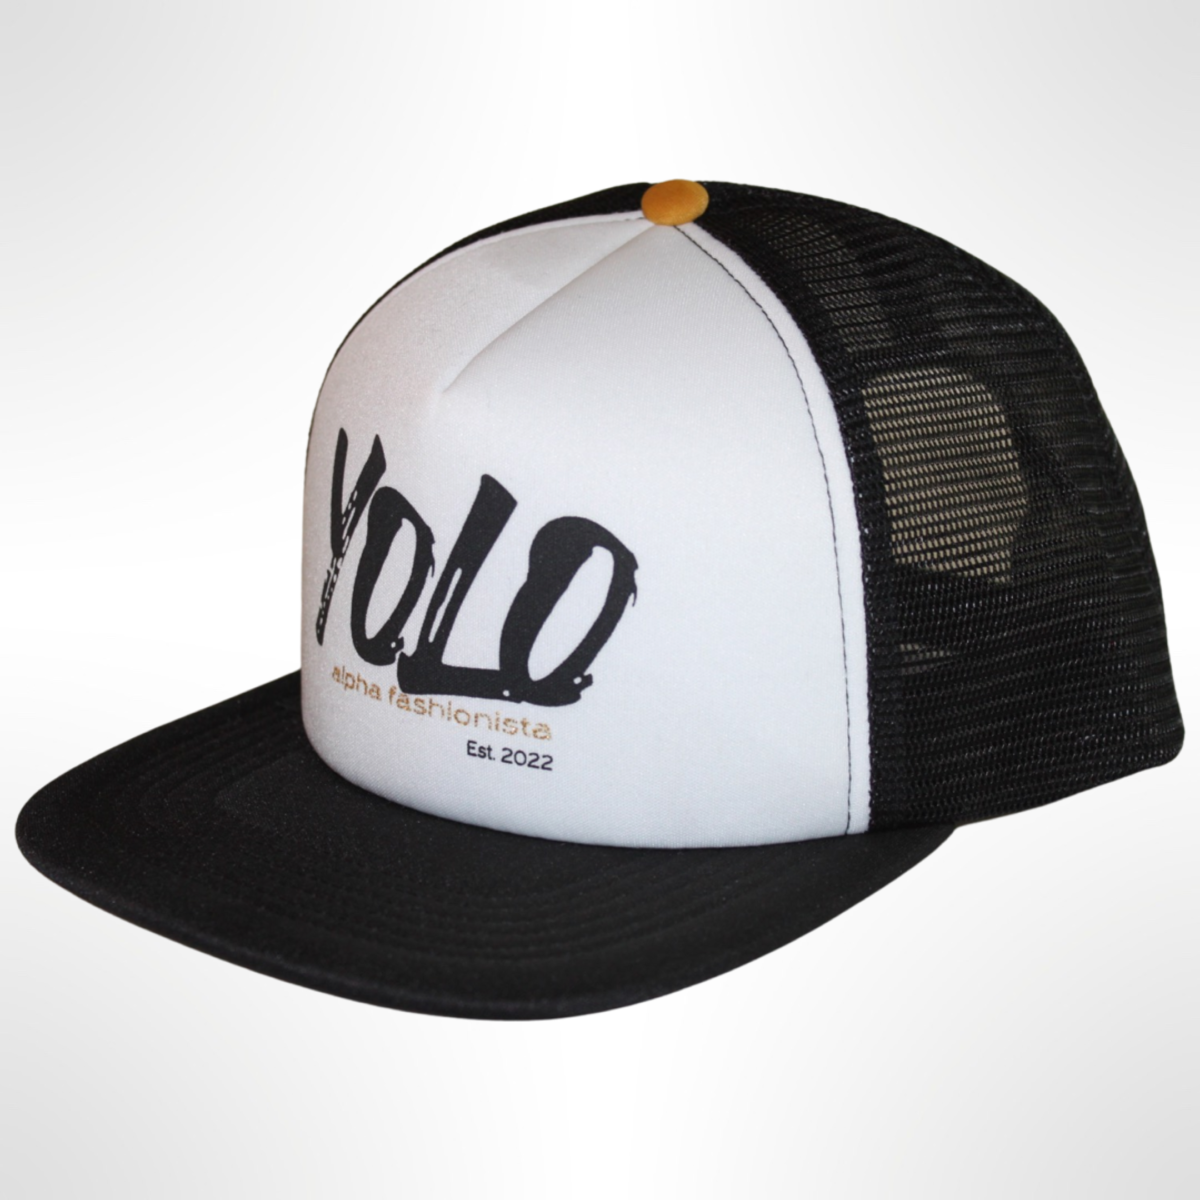 Buy Now Black White YOLO Trucker Hat Online | Alpha Fashionista